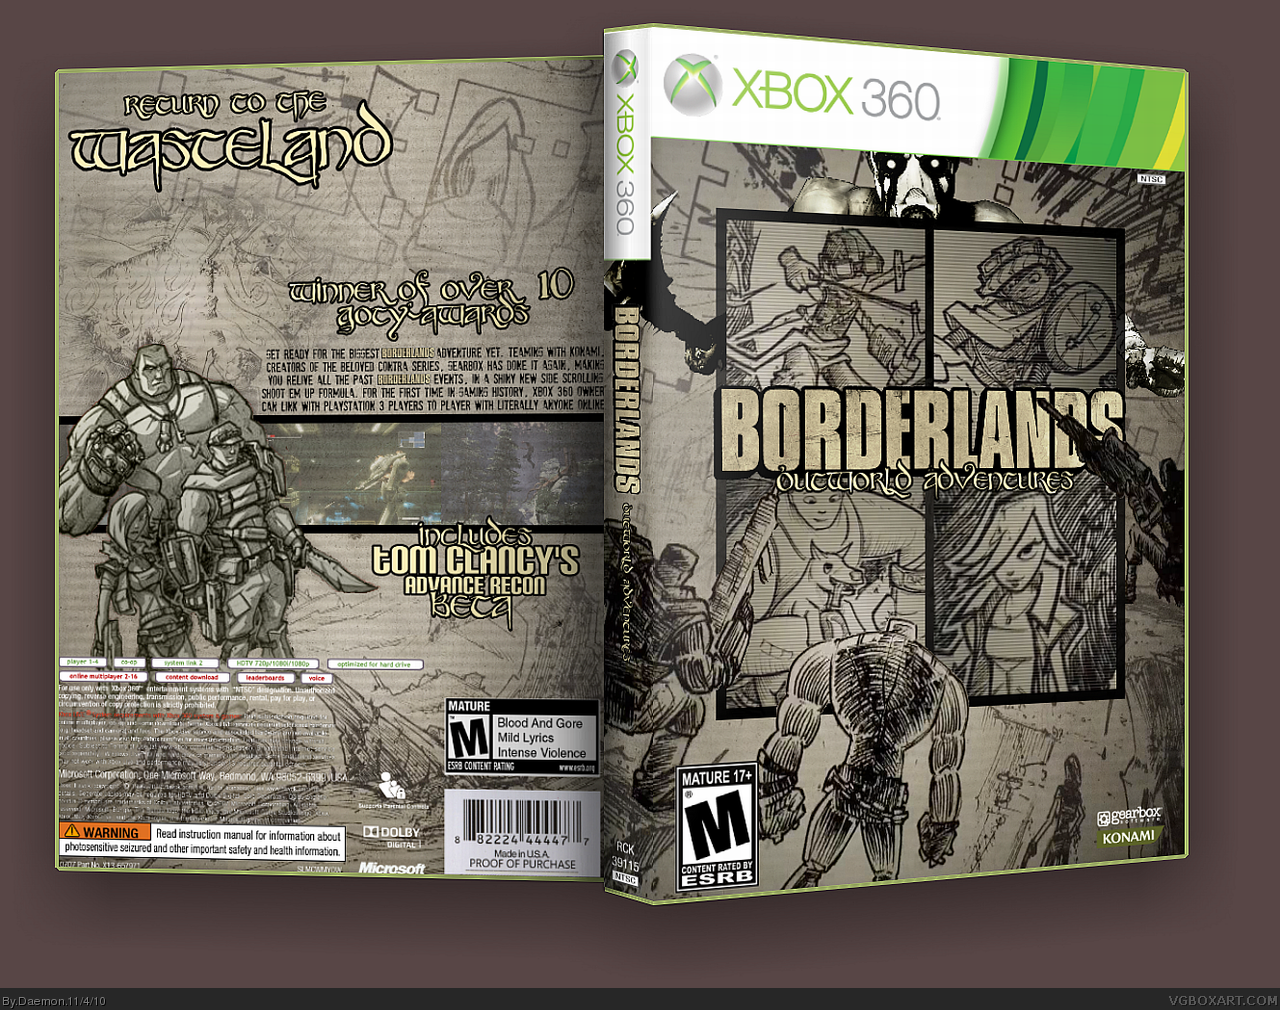 Borderlands: Outland Adventures box cover